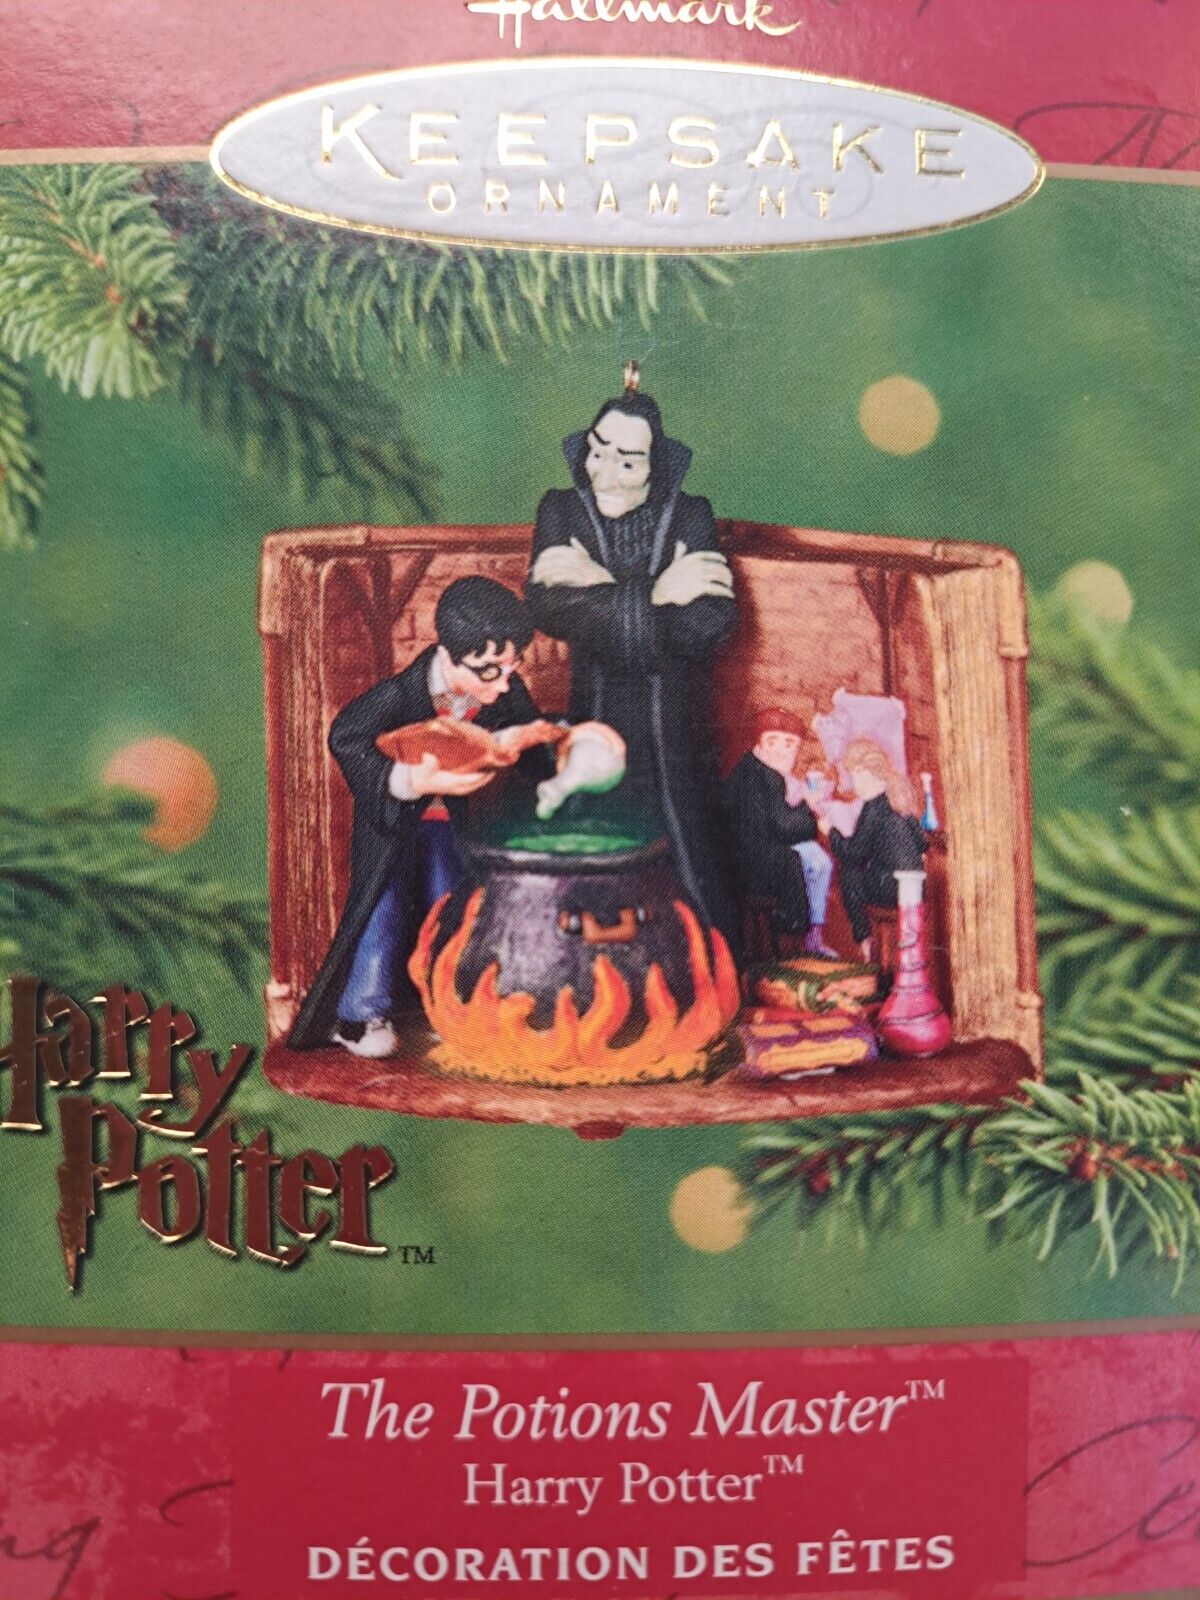 2001 Hallmark Harry Potter THE POTIONS MASTER Keepsake Christmas Ornament.